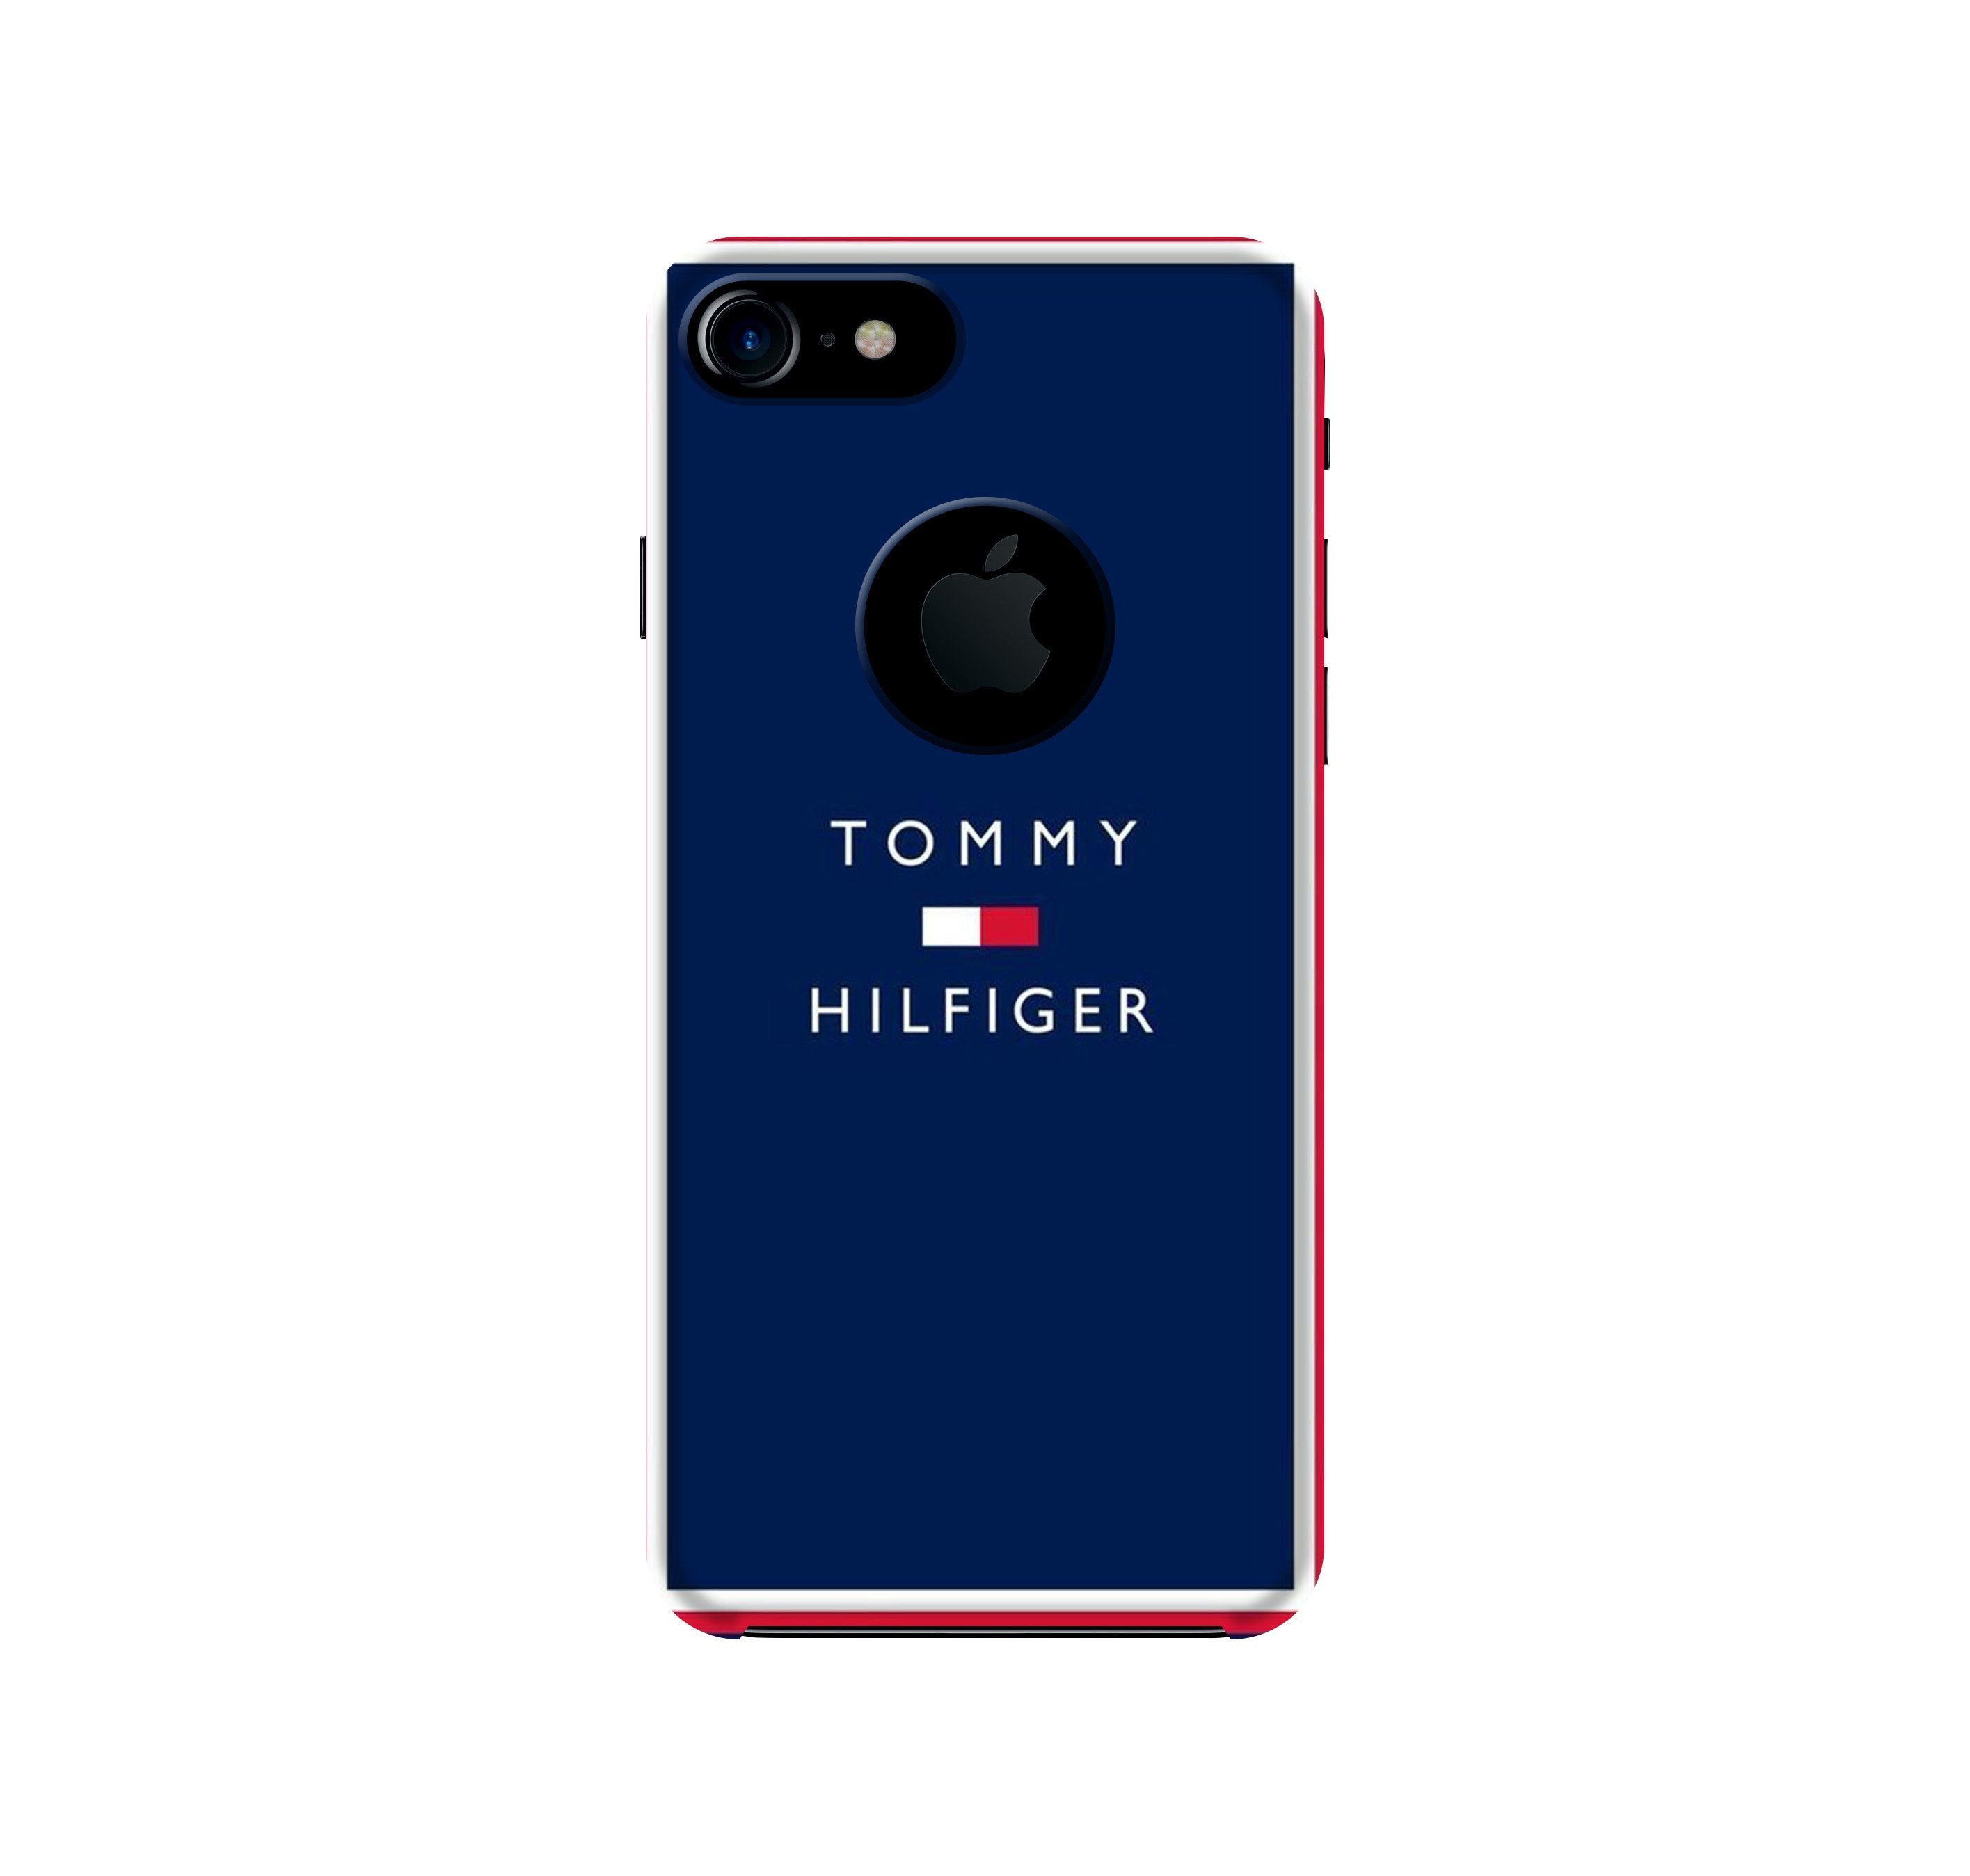 Tommy Hilfiger Case for iPhone 7 logo cut (Design No. 275)